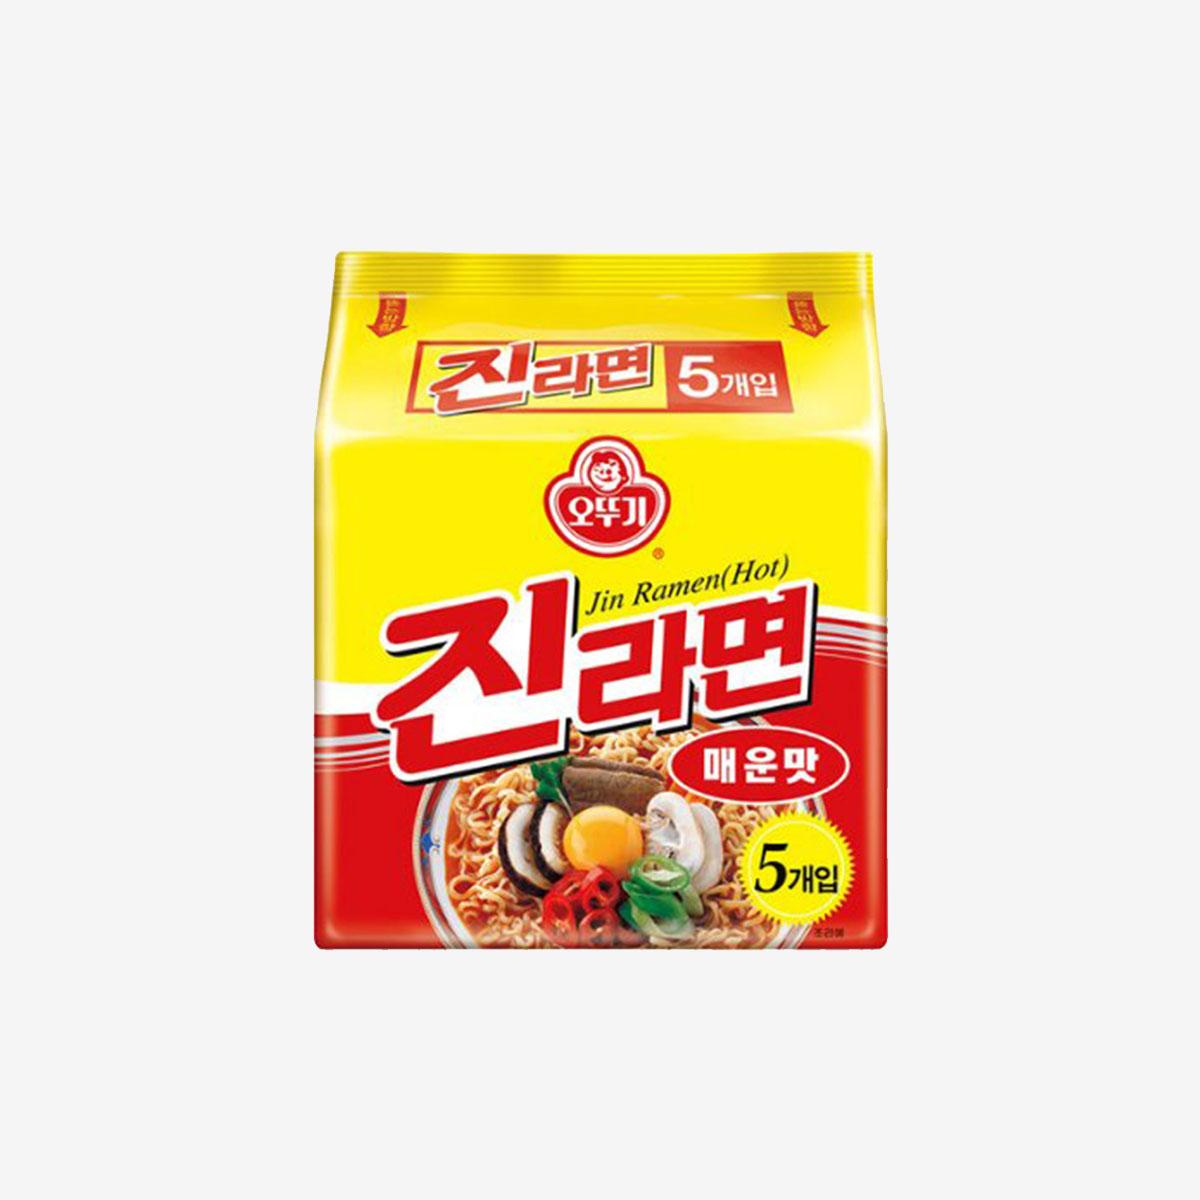 Jin Ramen Spicy (5 packs)